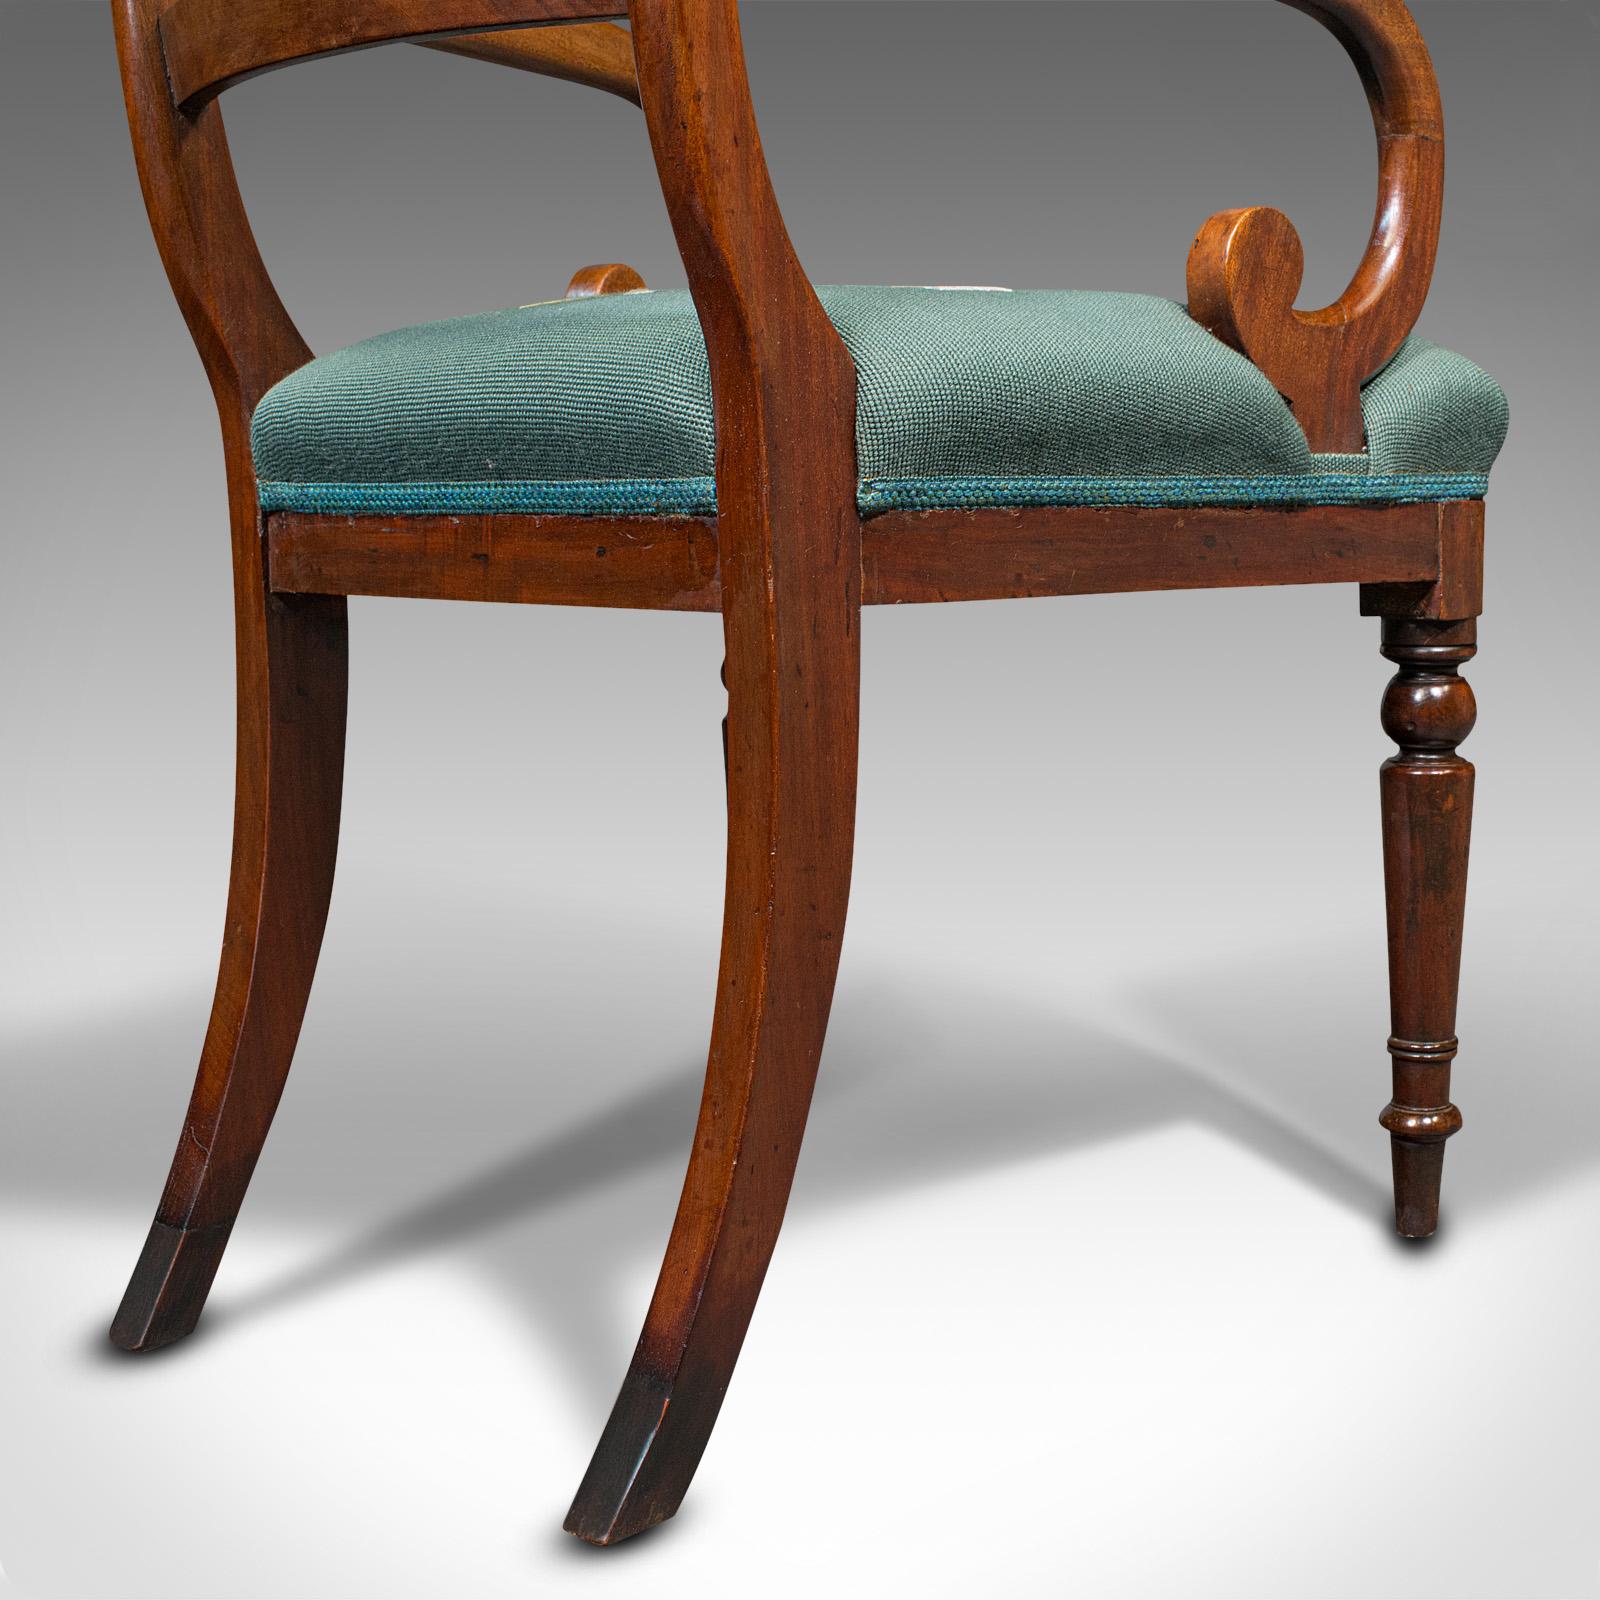 Antique Scroll Arm Desk Chair, English, Armchair, Needlepoint, Regency, C.1820 6